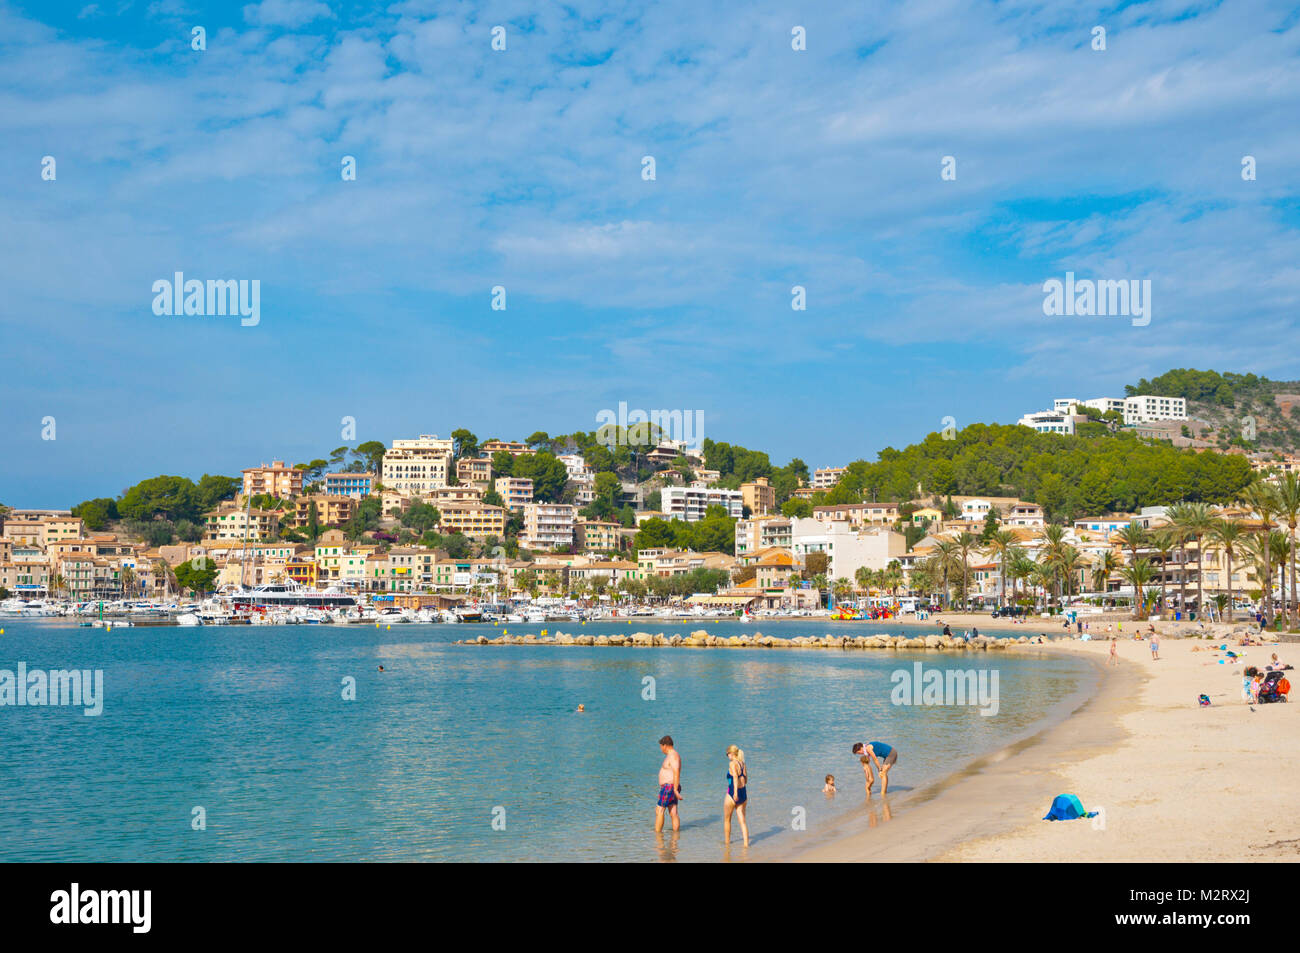 Platja de Port de soller, beach, Port de Soller, Mallorca, Balearic islands, Spain Stock Photo